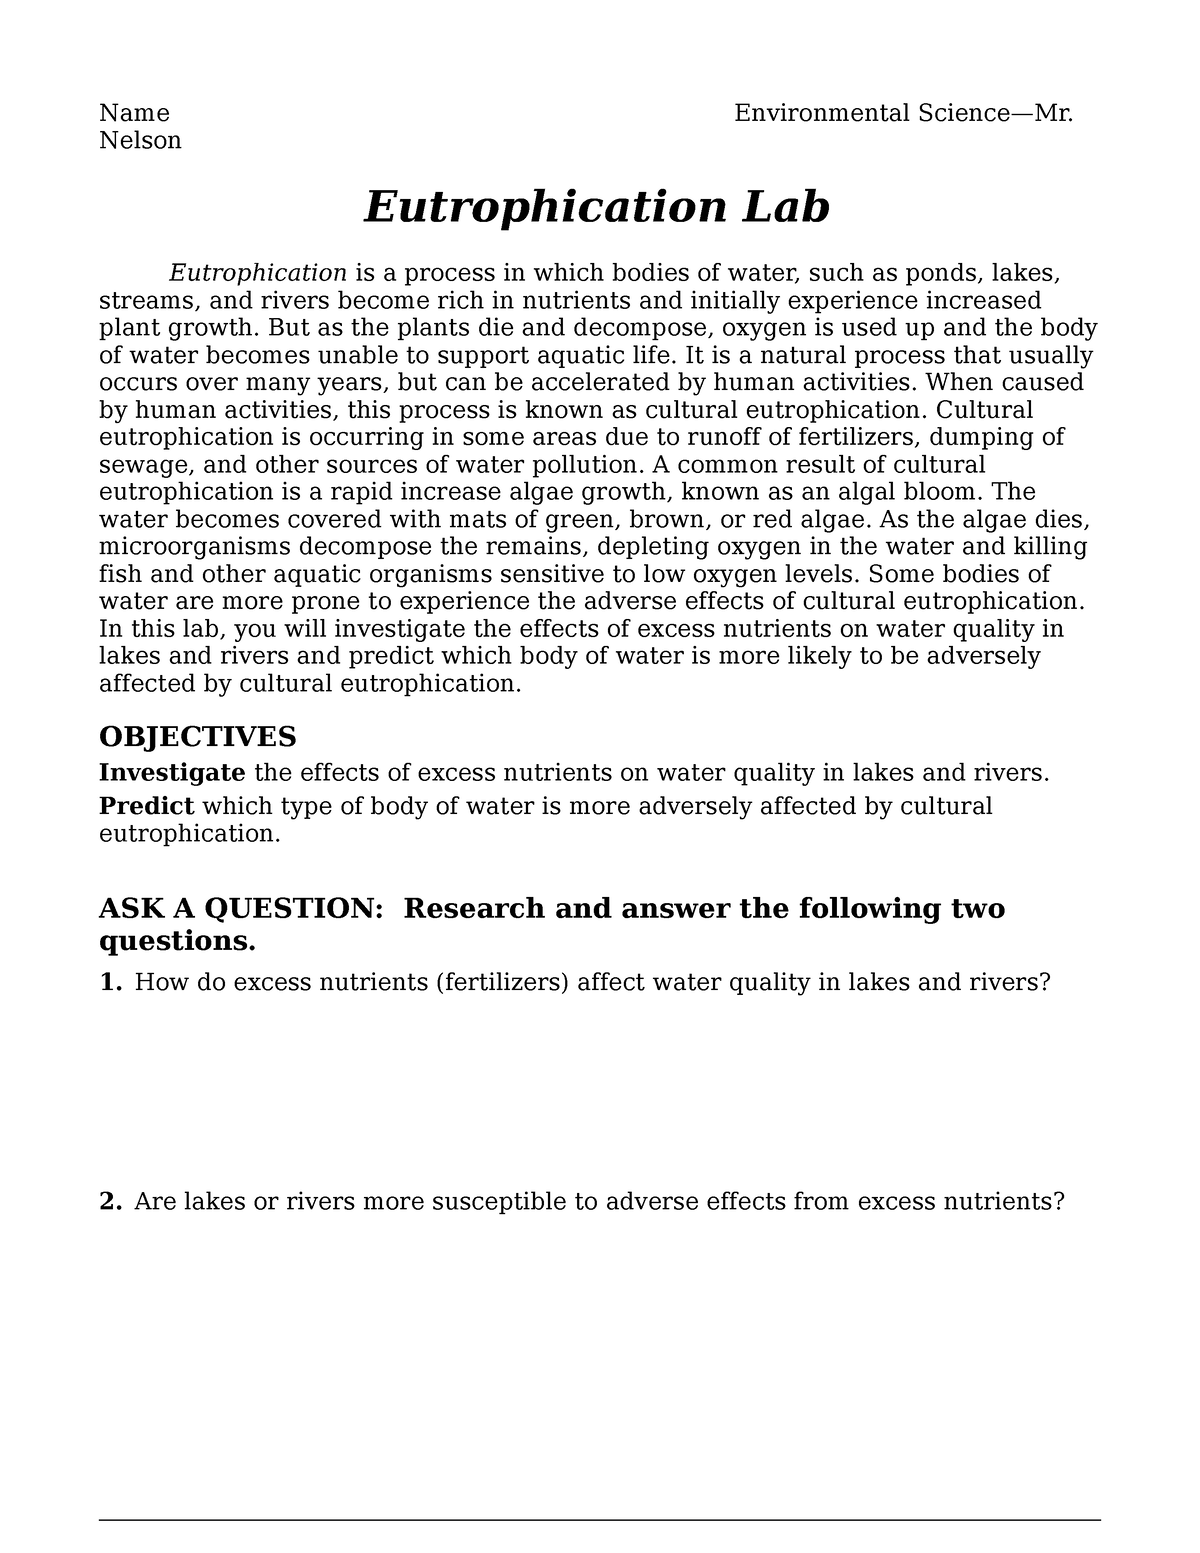 eutrophication-lab-2014-studocu